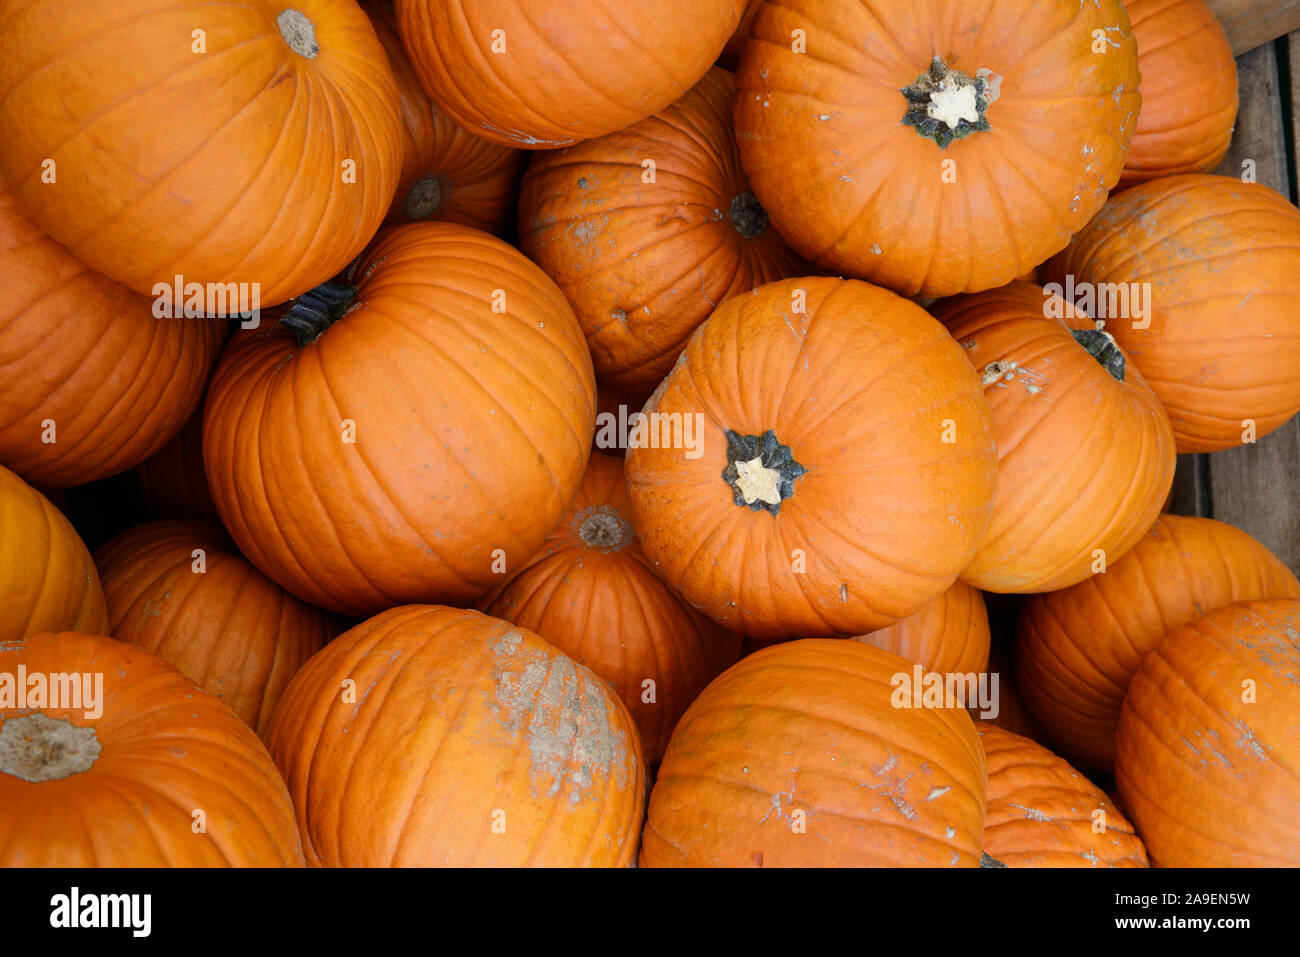 Display of Pumpkins or Cucurbitaceae Stock Photo